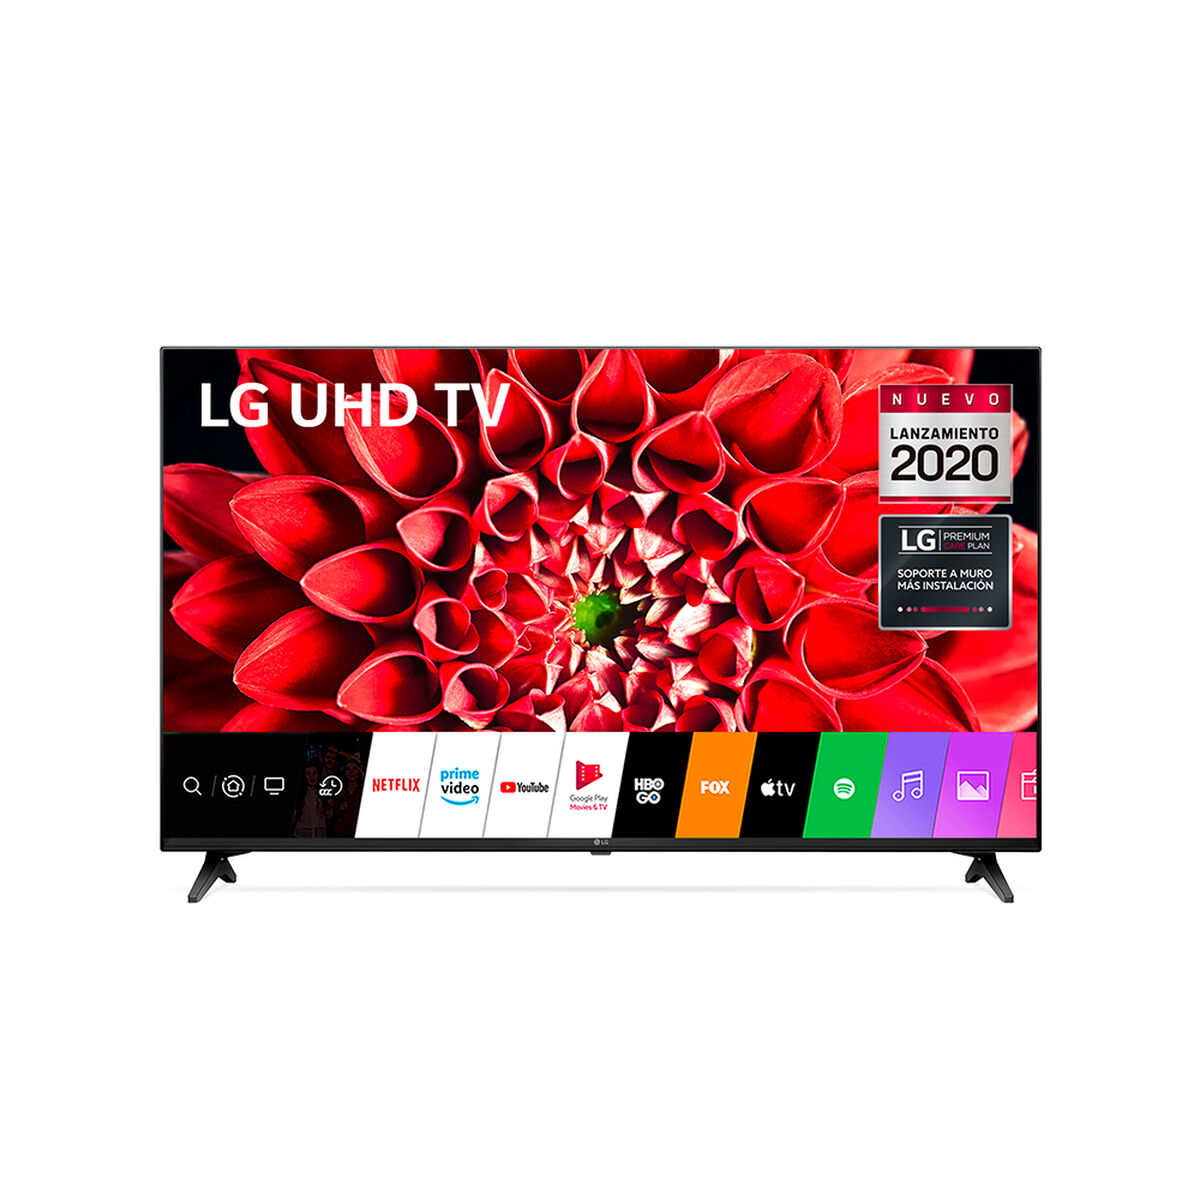 LED 75" LG 75UN7100 Smart TV 4K UHD